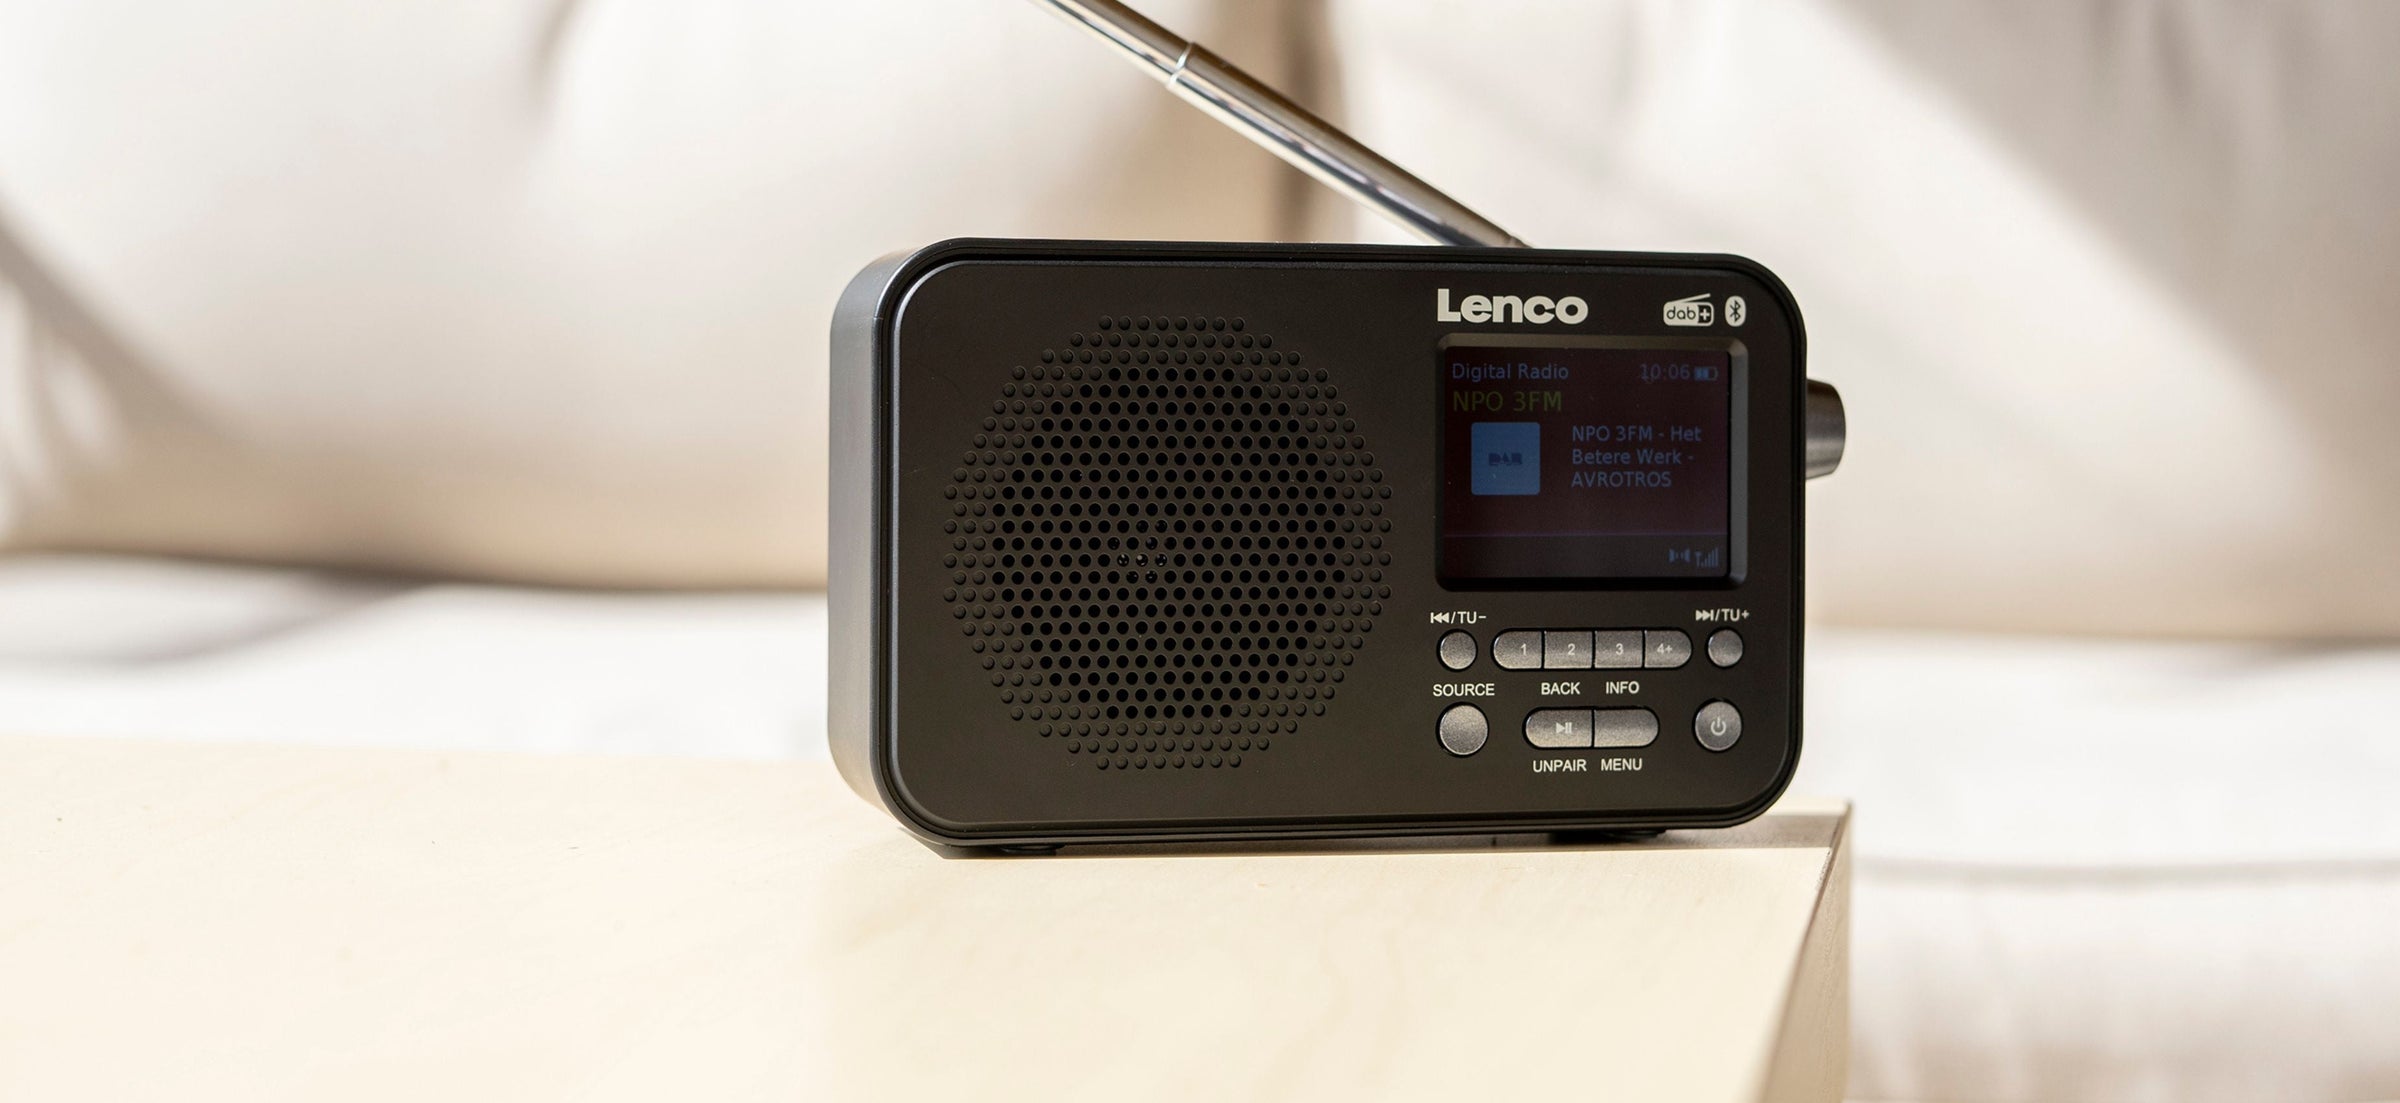 Shop Bluetooth the in | Official Now Lenco Lenco radios